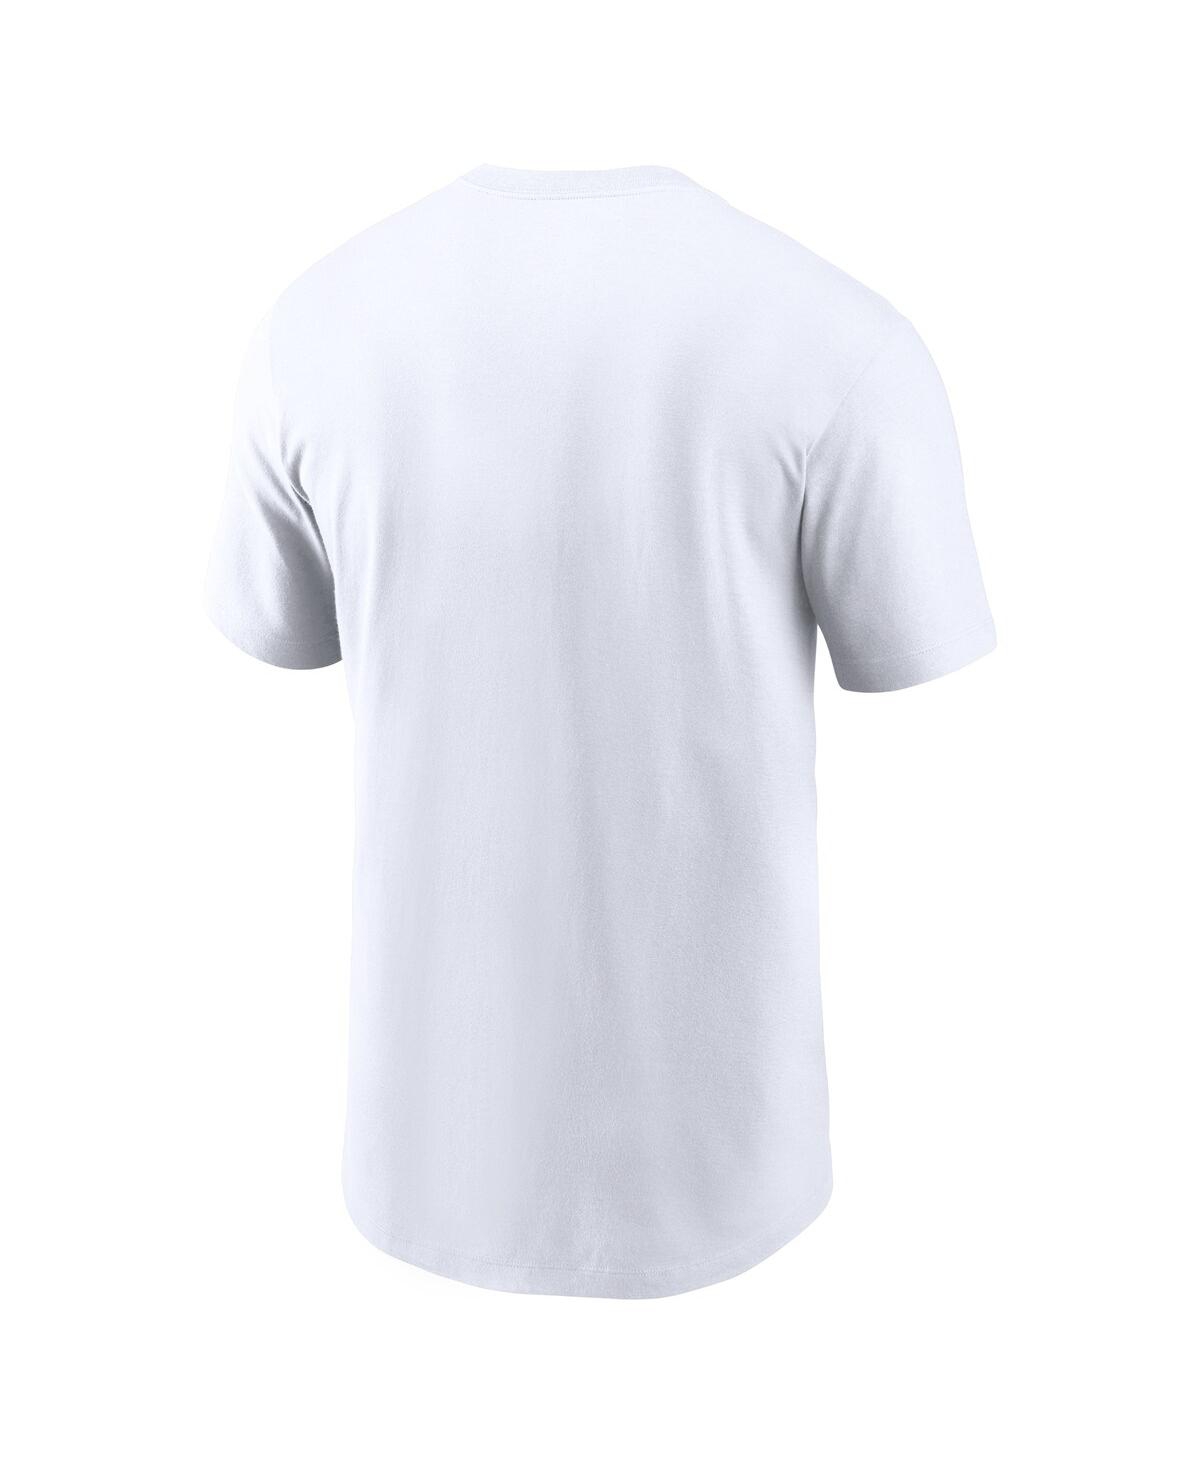 Shop Nike Men's  White Colorado Rockies 5280 Mile High Local Team T-shirt